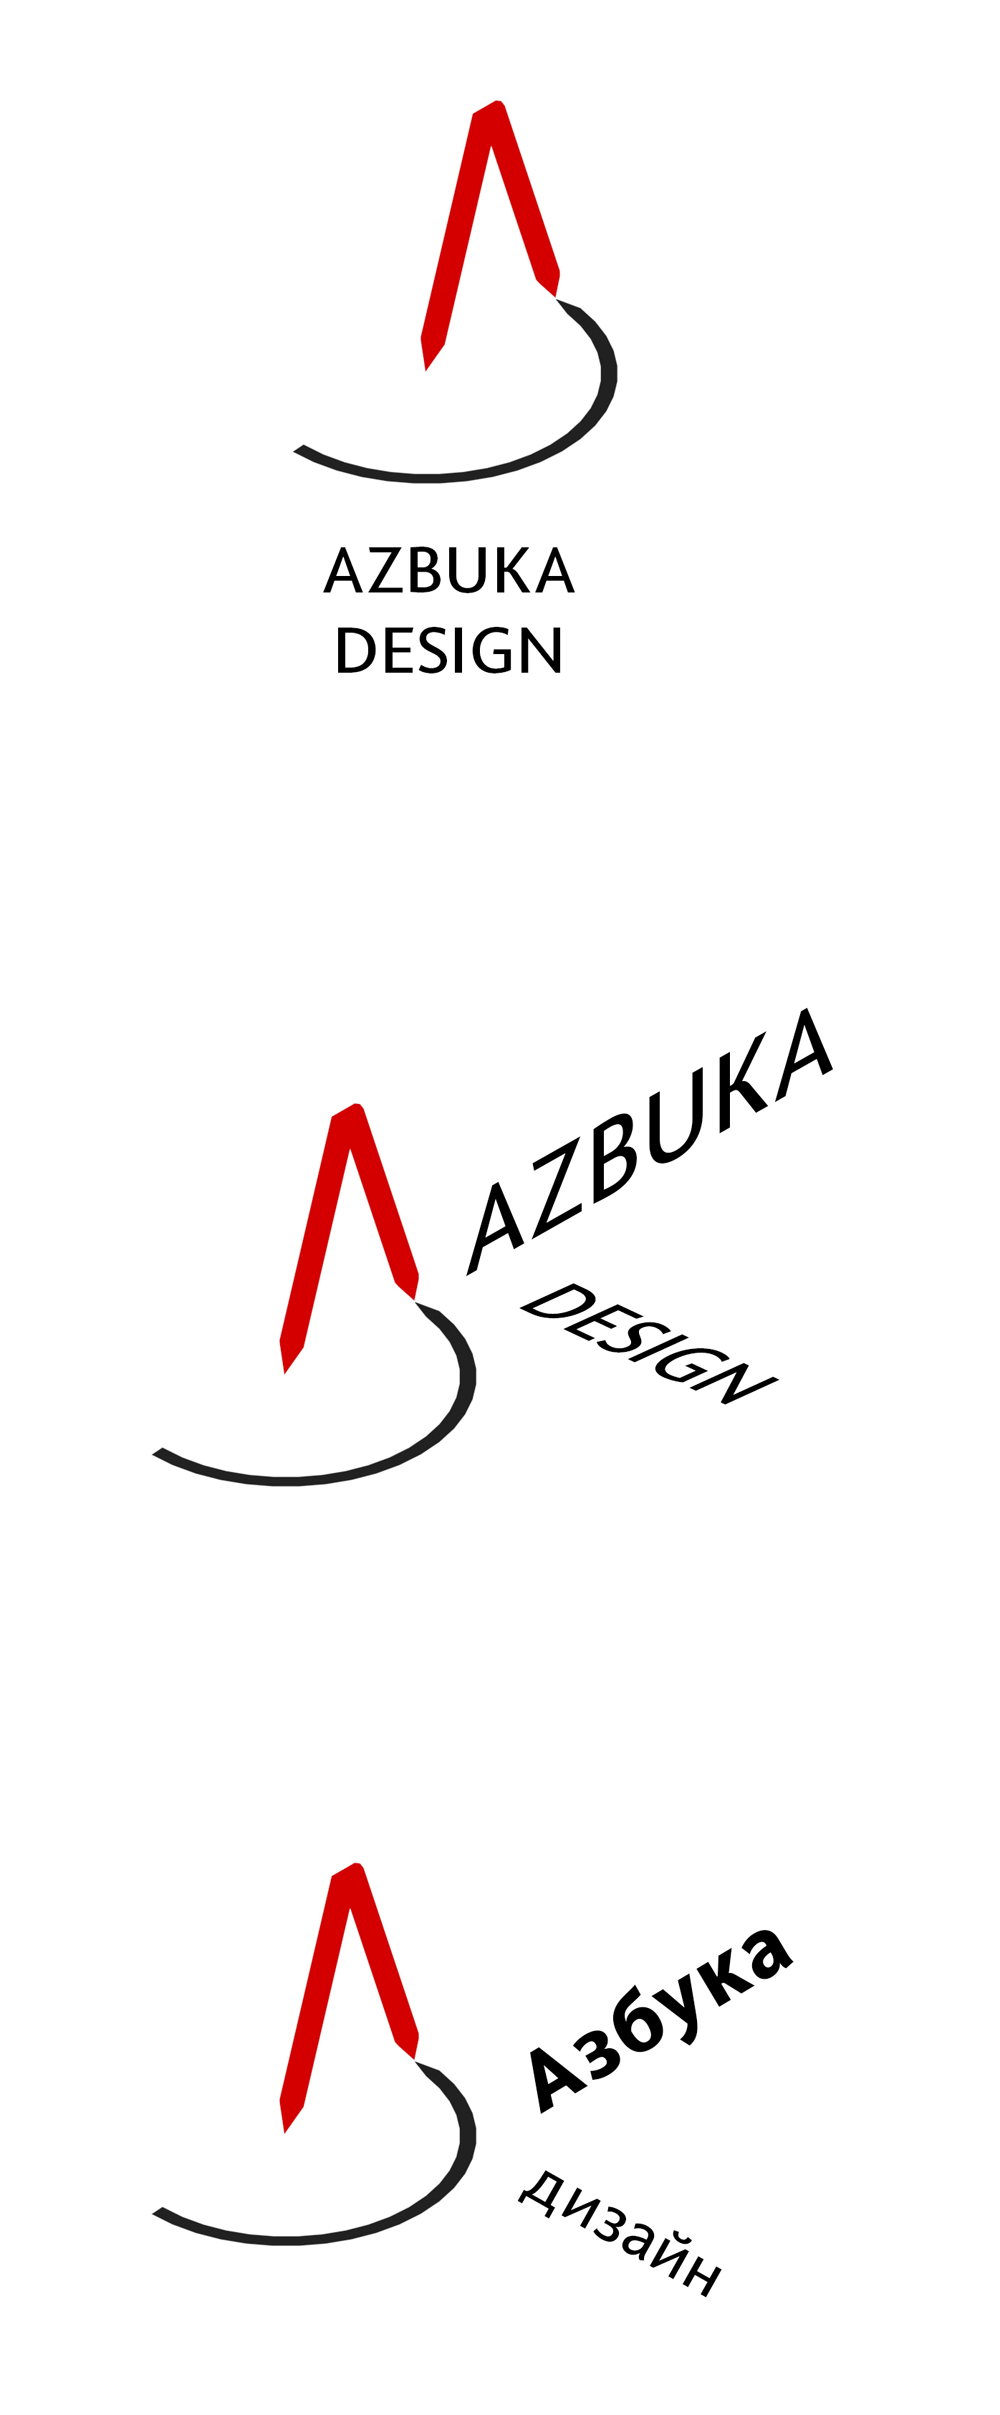 azbuka design process 02